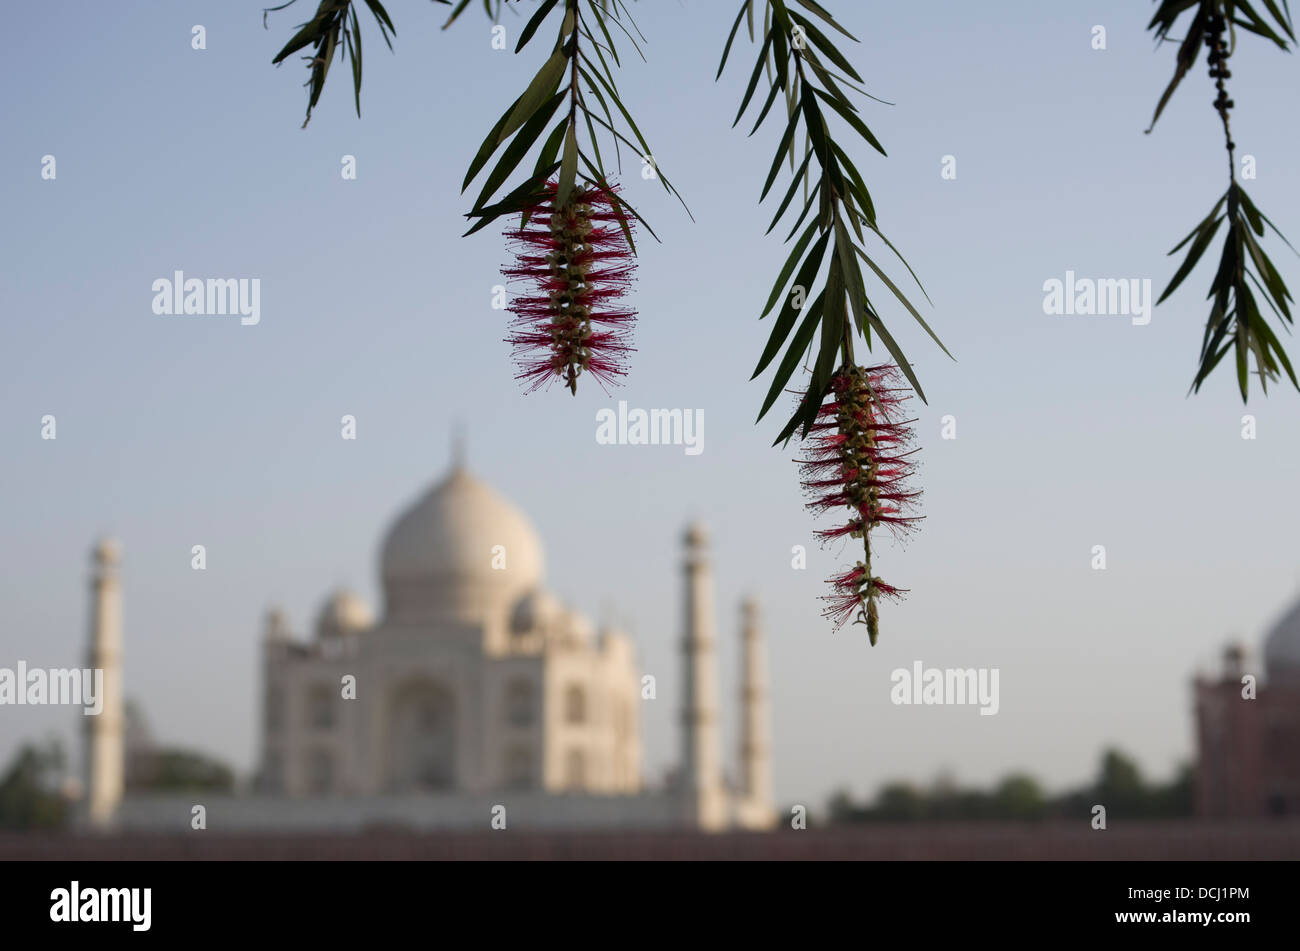 Taj Mahal weißen Marmor-Mausoleum - Agra, Indien ein UNESCO-Weltkulturerbe Stockfoto